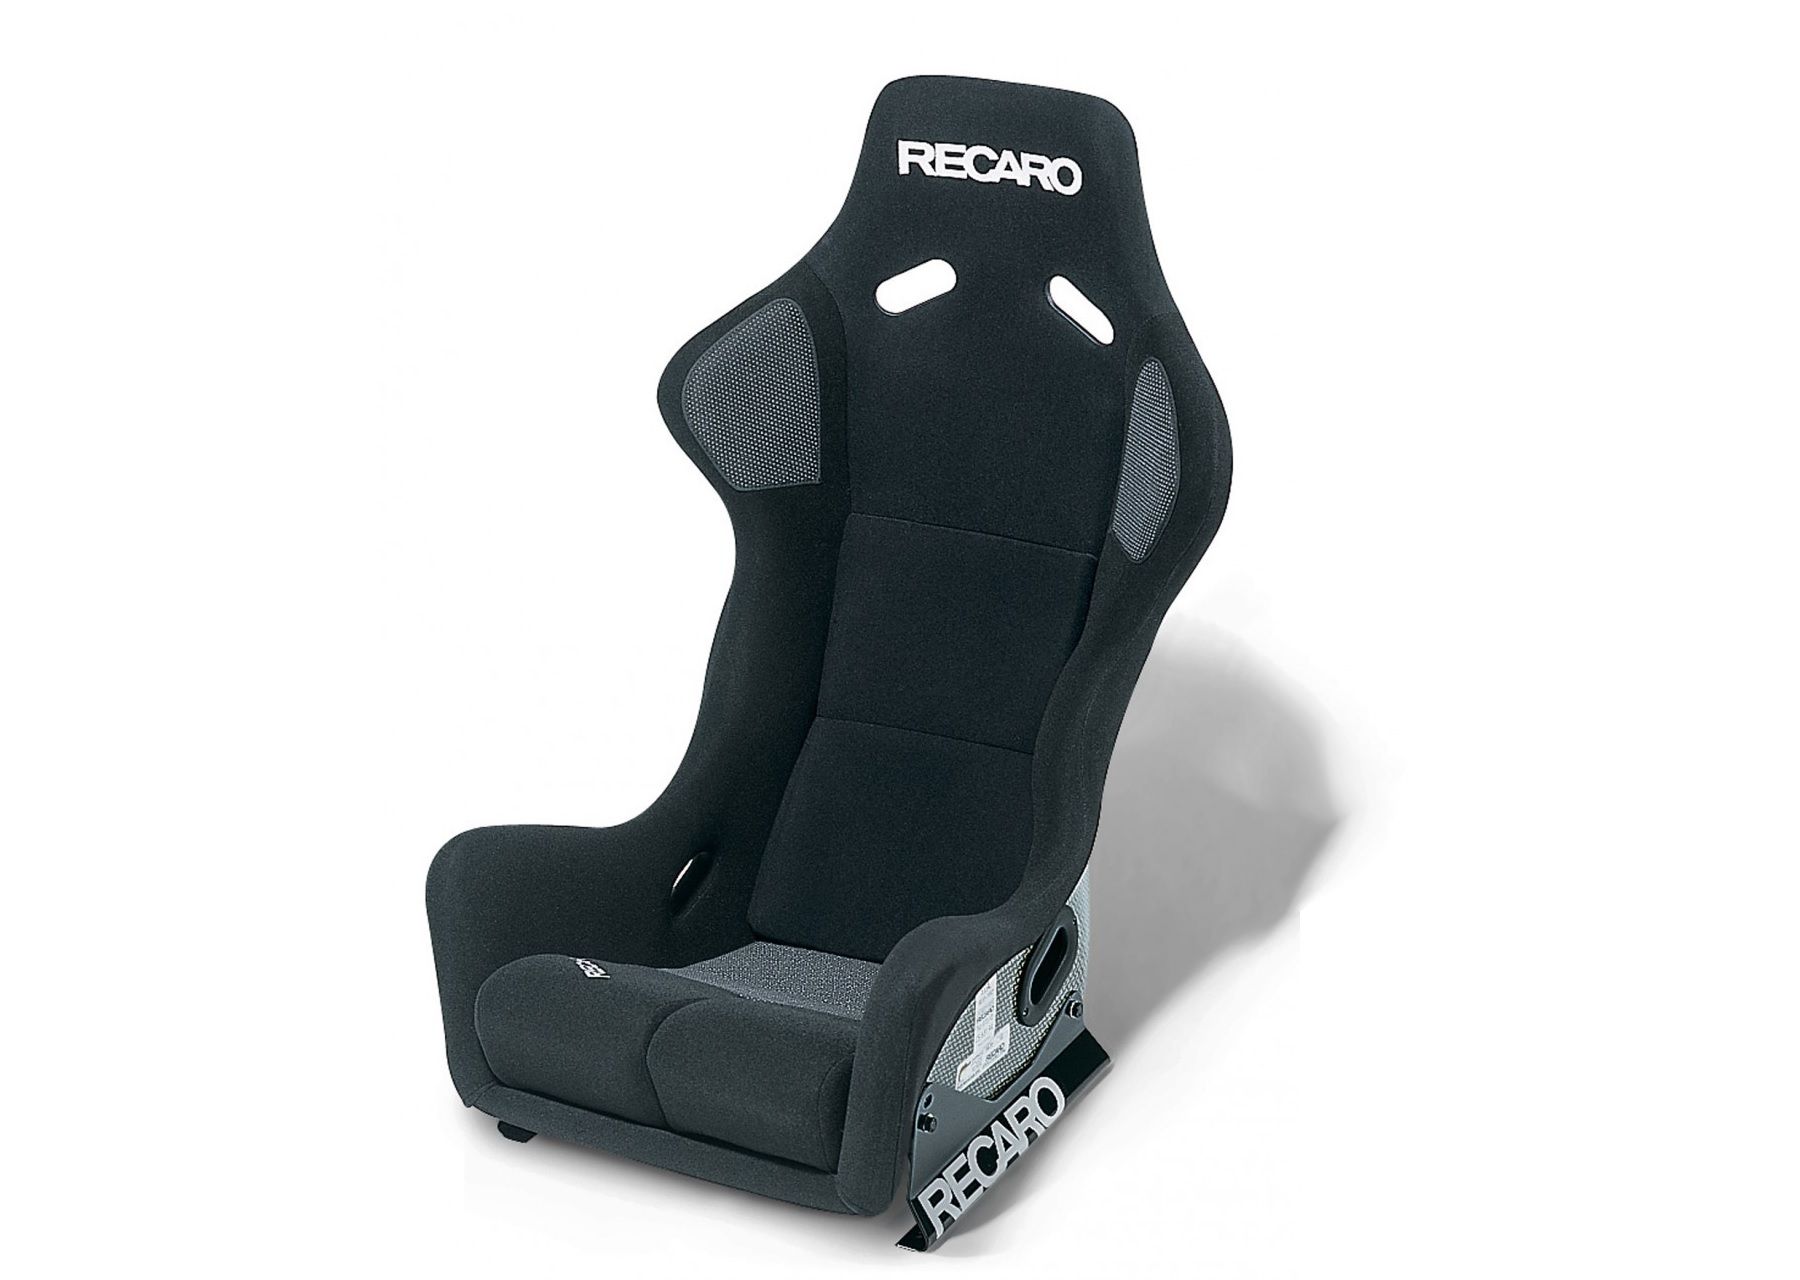 Recaro Racing Seats, Sparco Harnesses, Katzkin leather trim